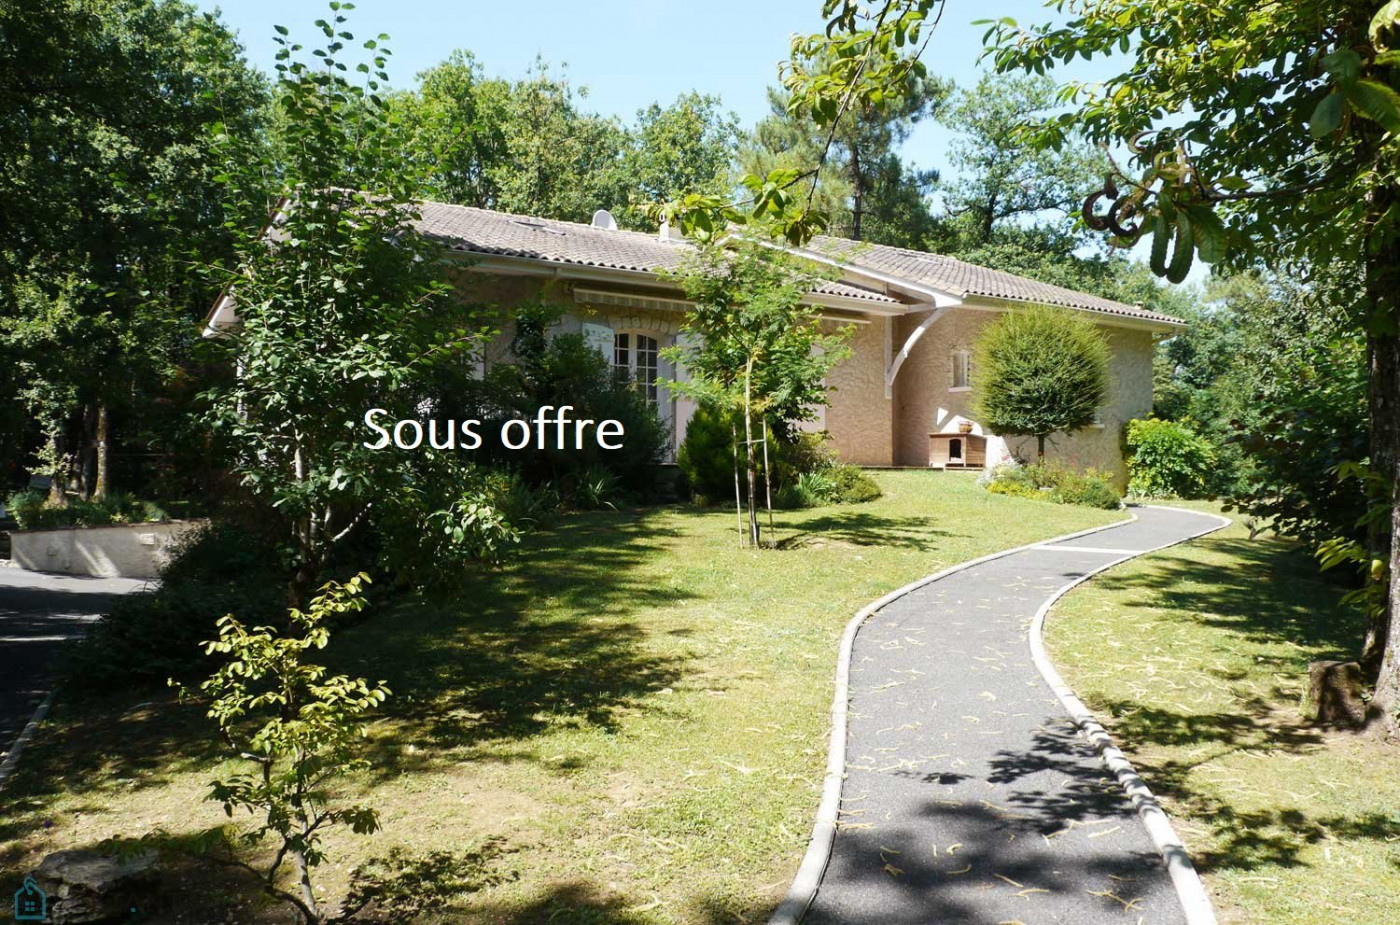 vente Maison individuelle Angouleme